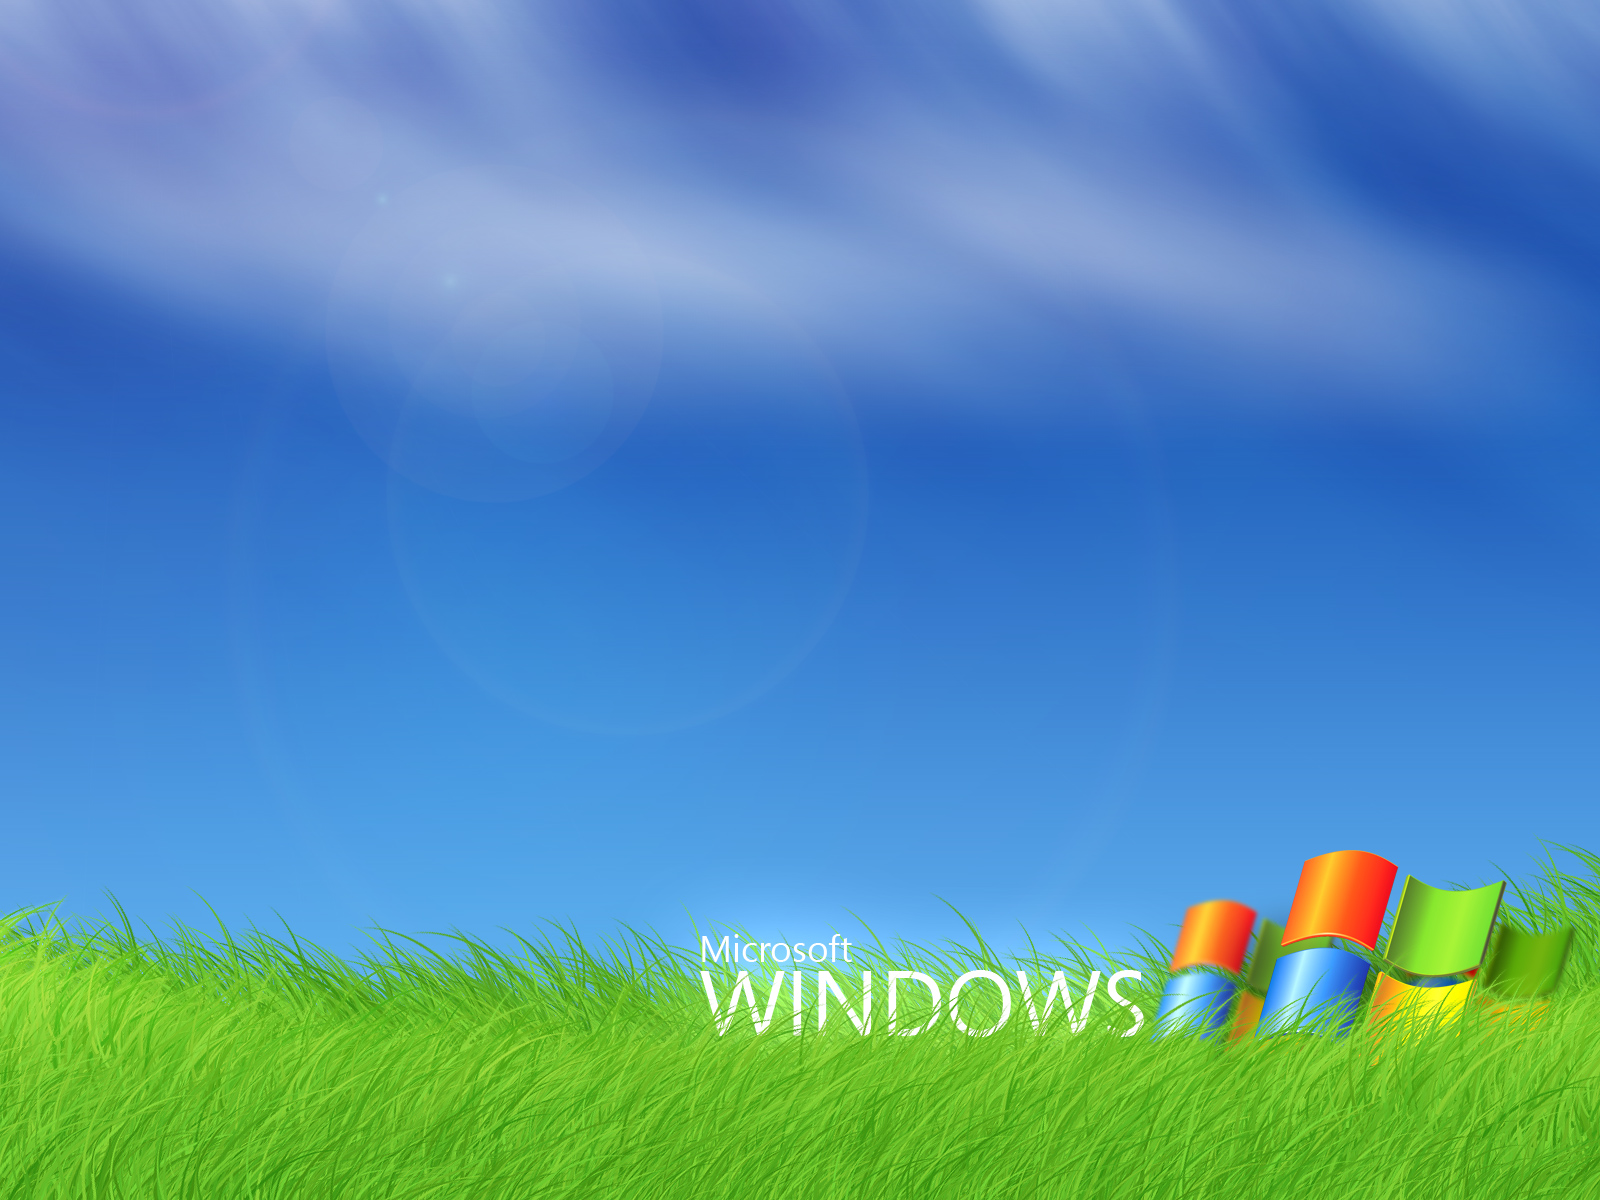 windows 7 wallpaper, windows7 wallpapers, 윈도우7, 윈도우7 바탕화면, 윈도우즈 바탕화면, 윈도우즈7 바탕화면, Wallpapers, HD Wallpapers